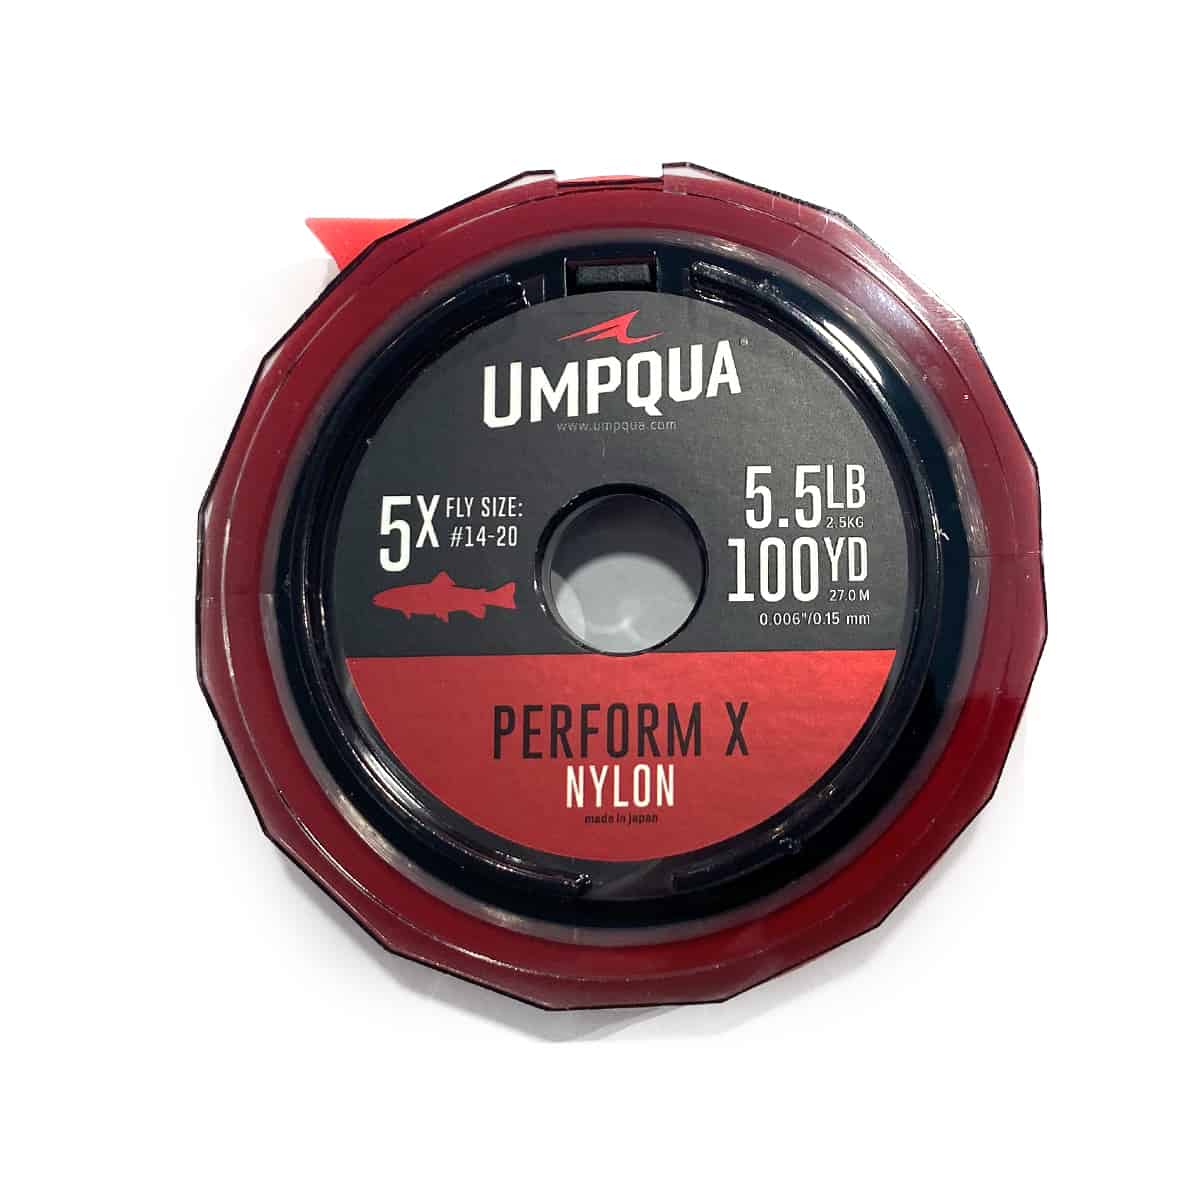 Umpqua Perform X Nylon Trout Tippet - 100 Yd. Guide Spool - basin